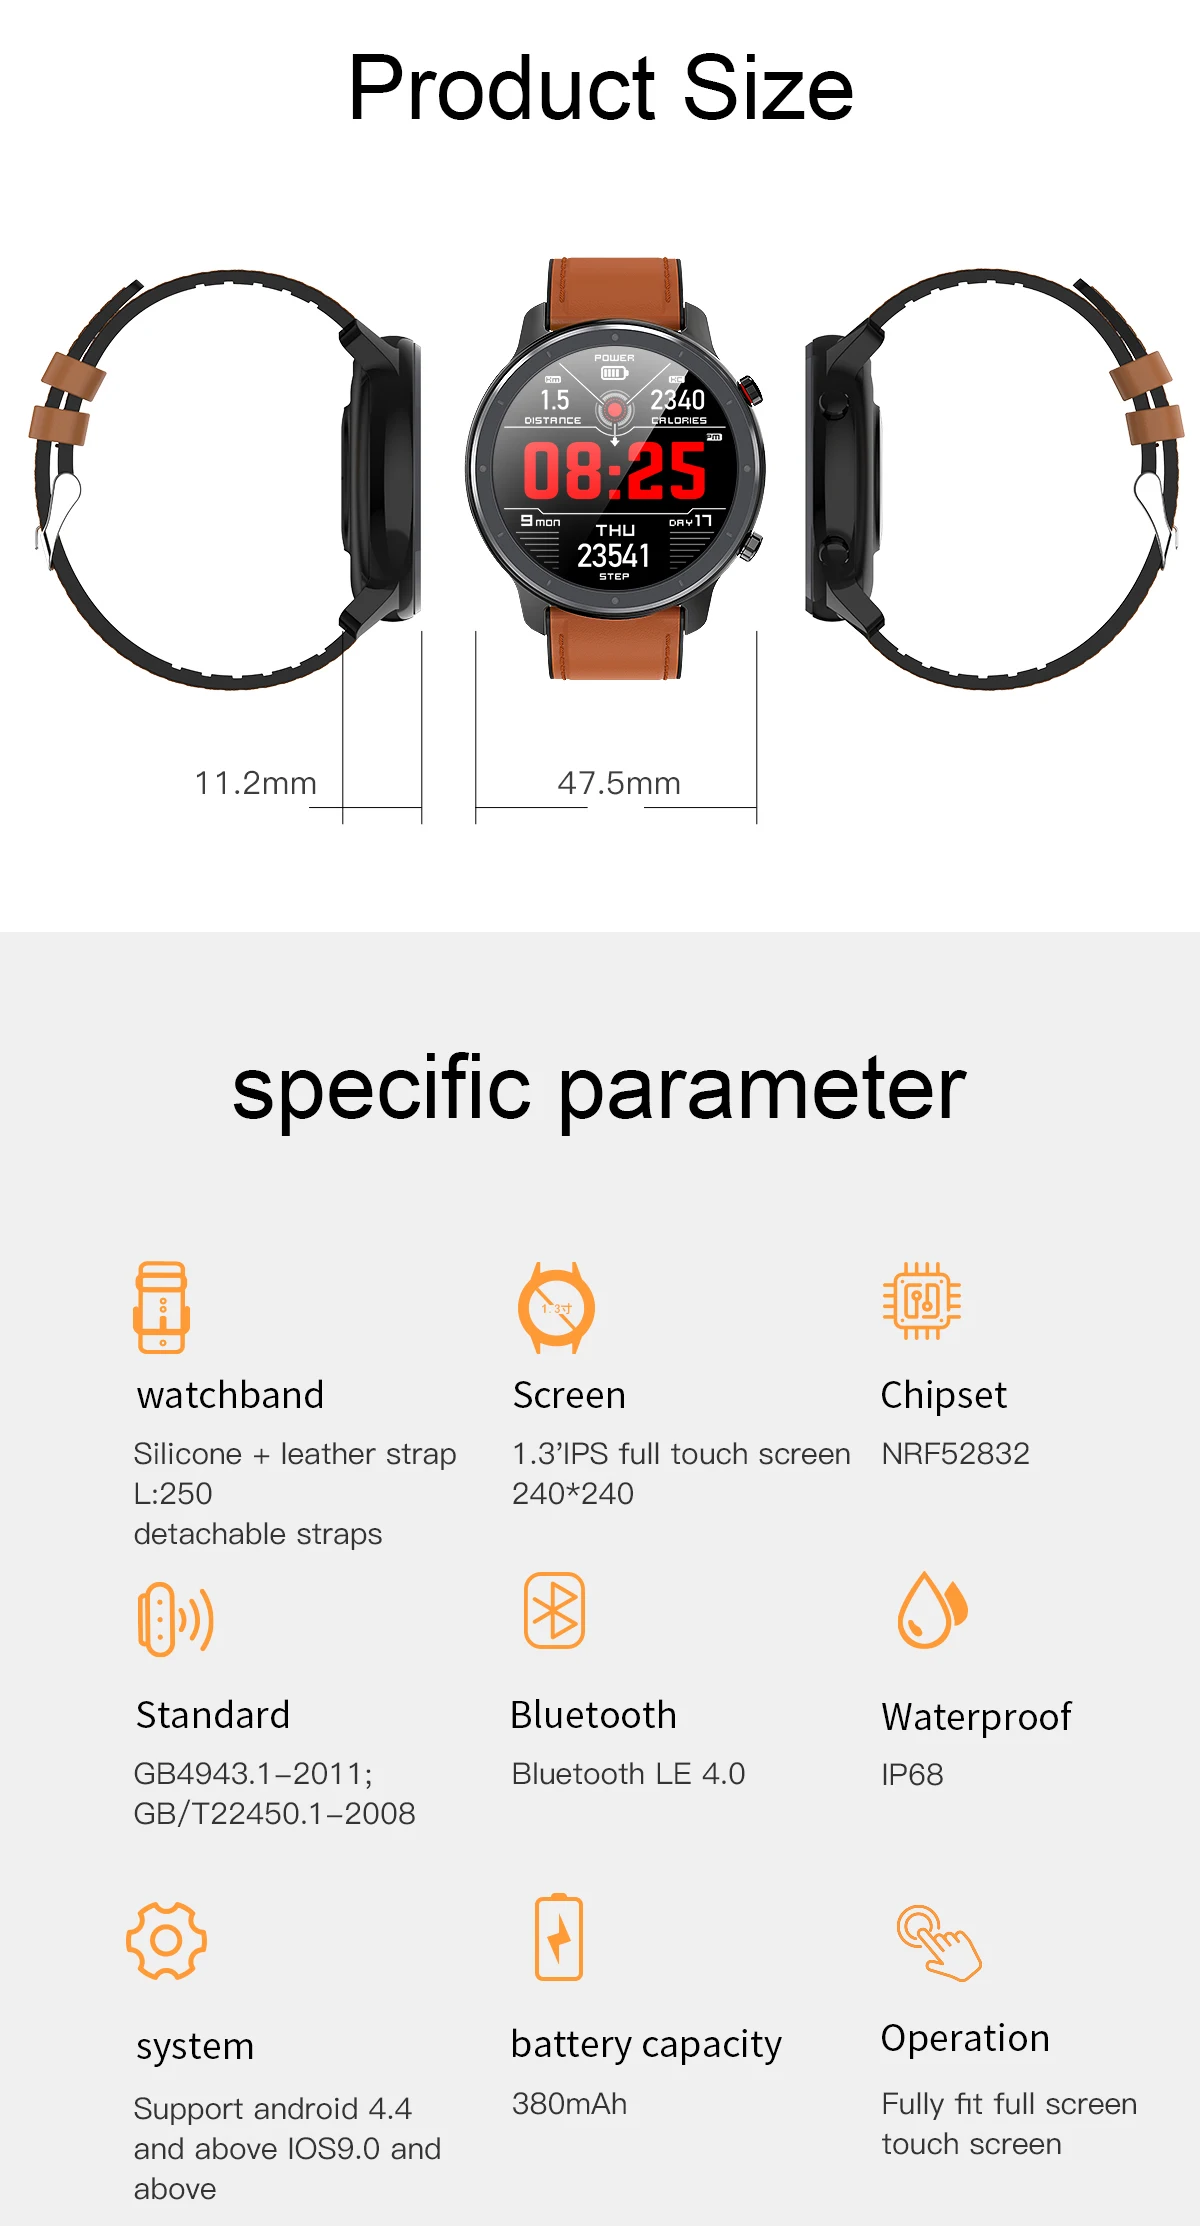 à prova dip68 água freqüência cardíaca monitor pressão arterial smartwatch